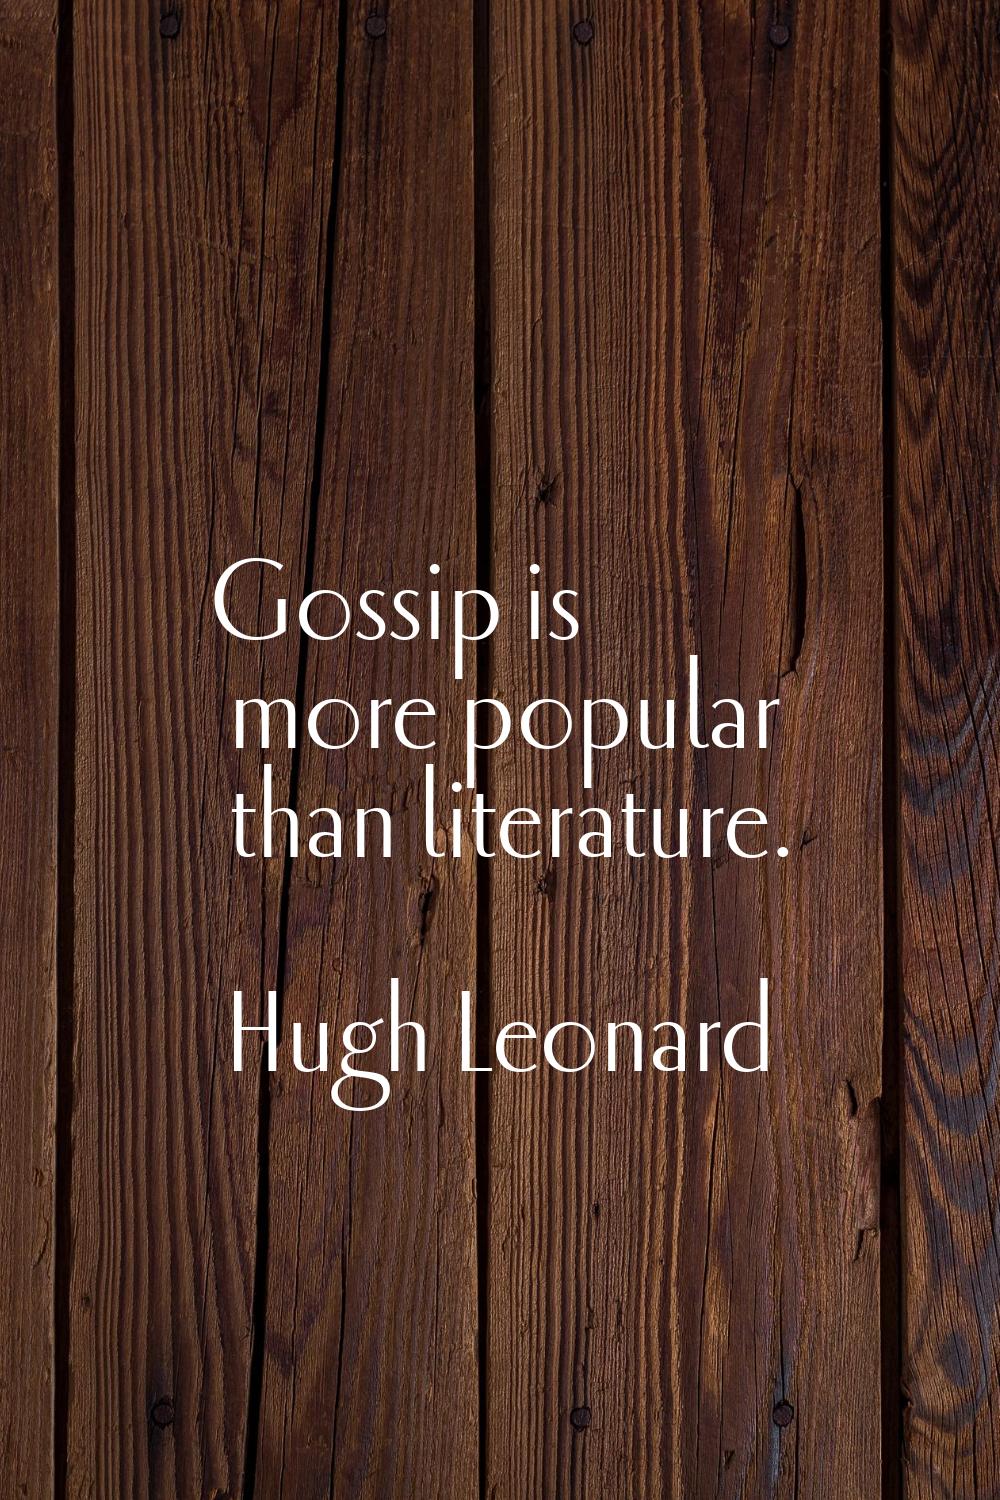 Gossip is more popular than literature.